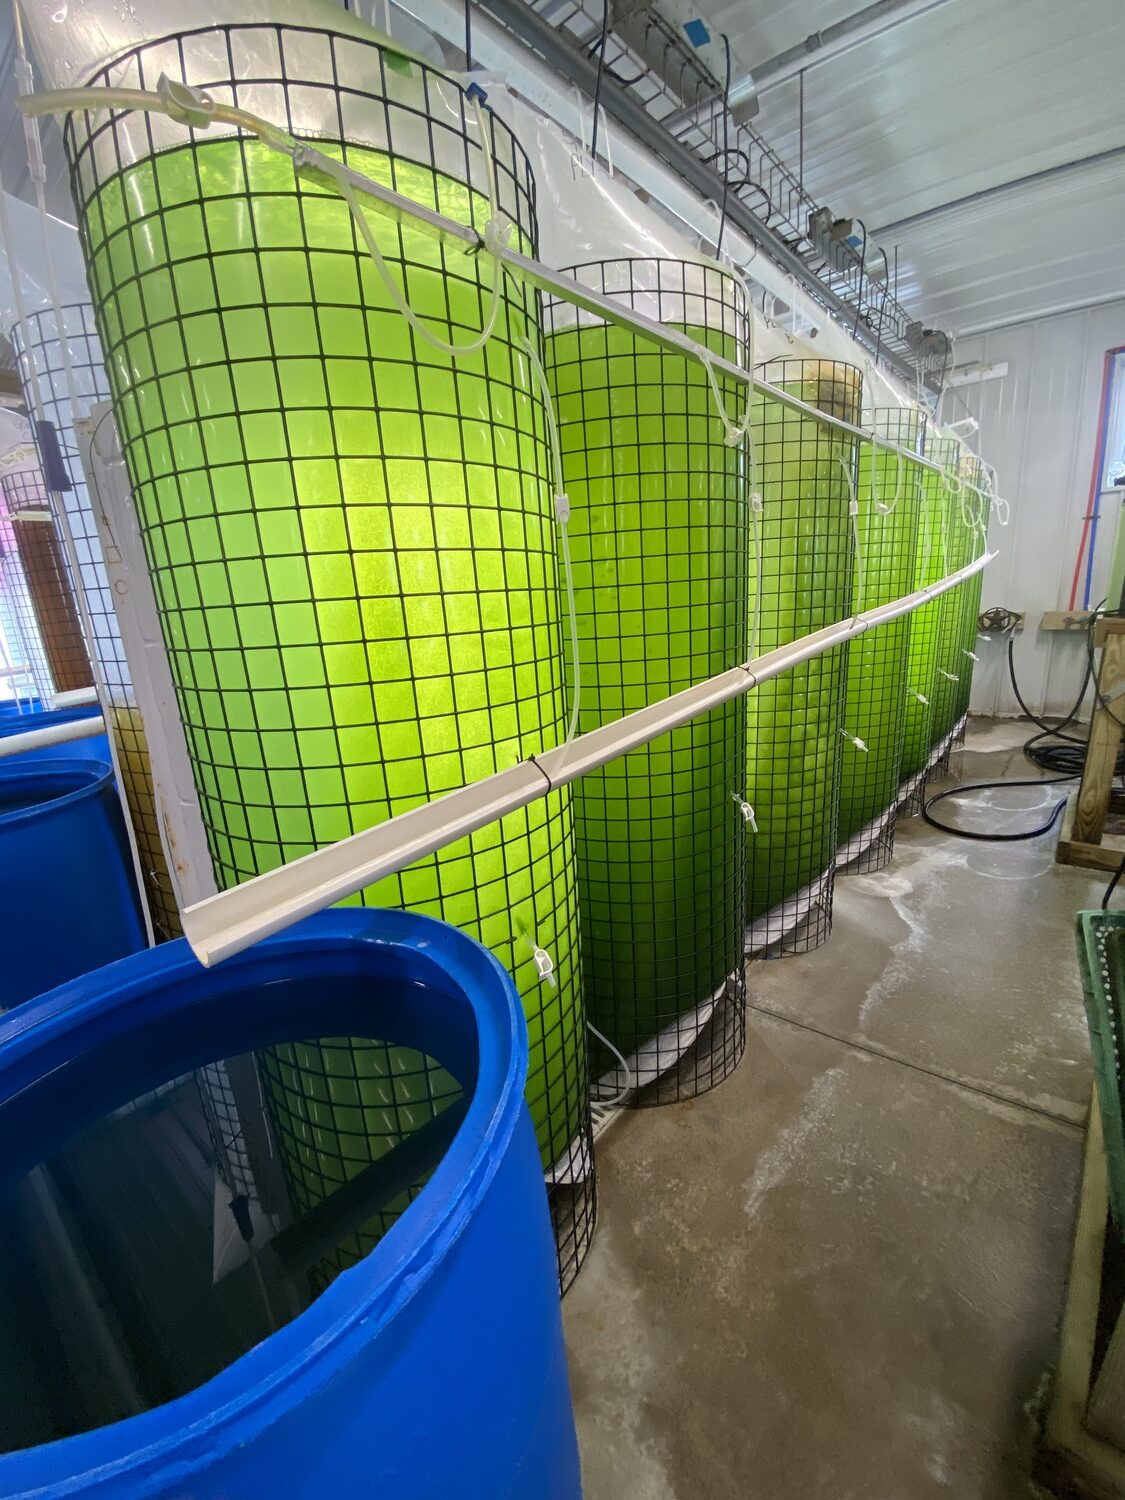 Tanks with algae where the oyster seeds grow. kim covell